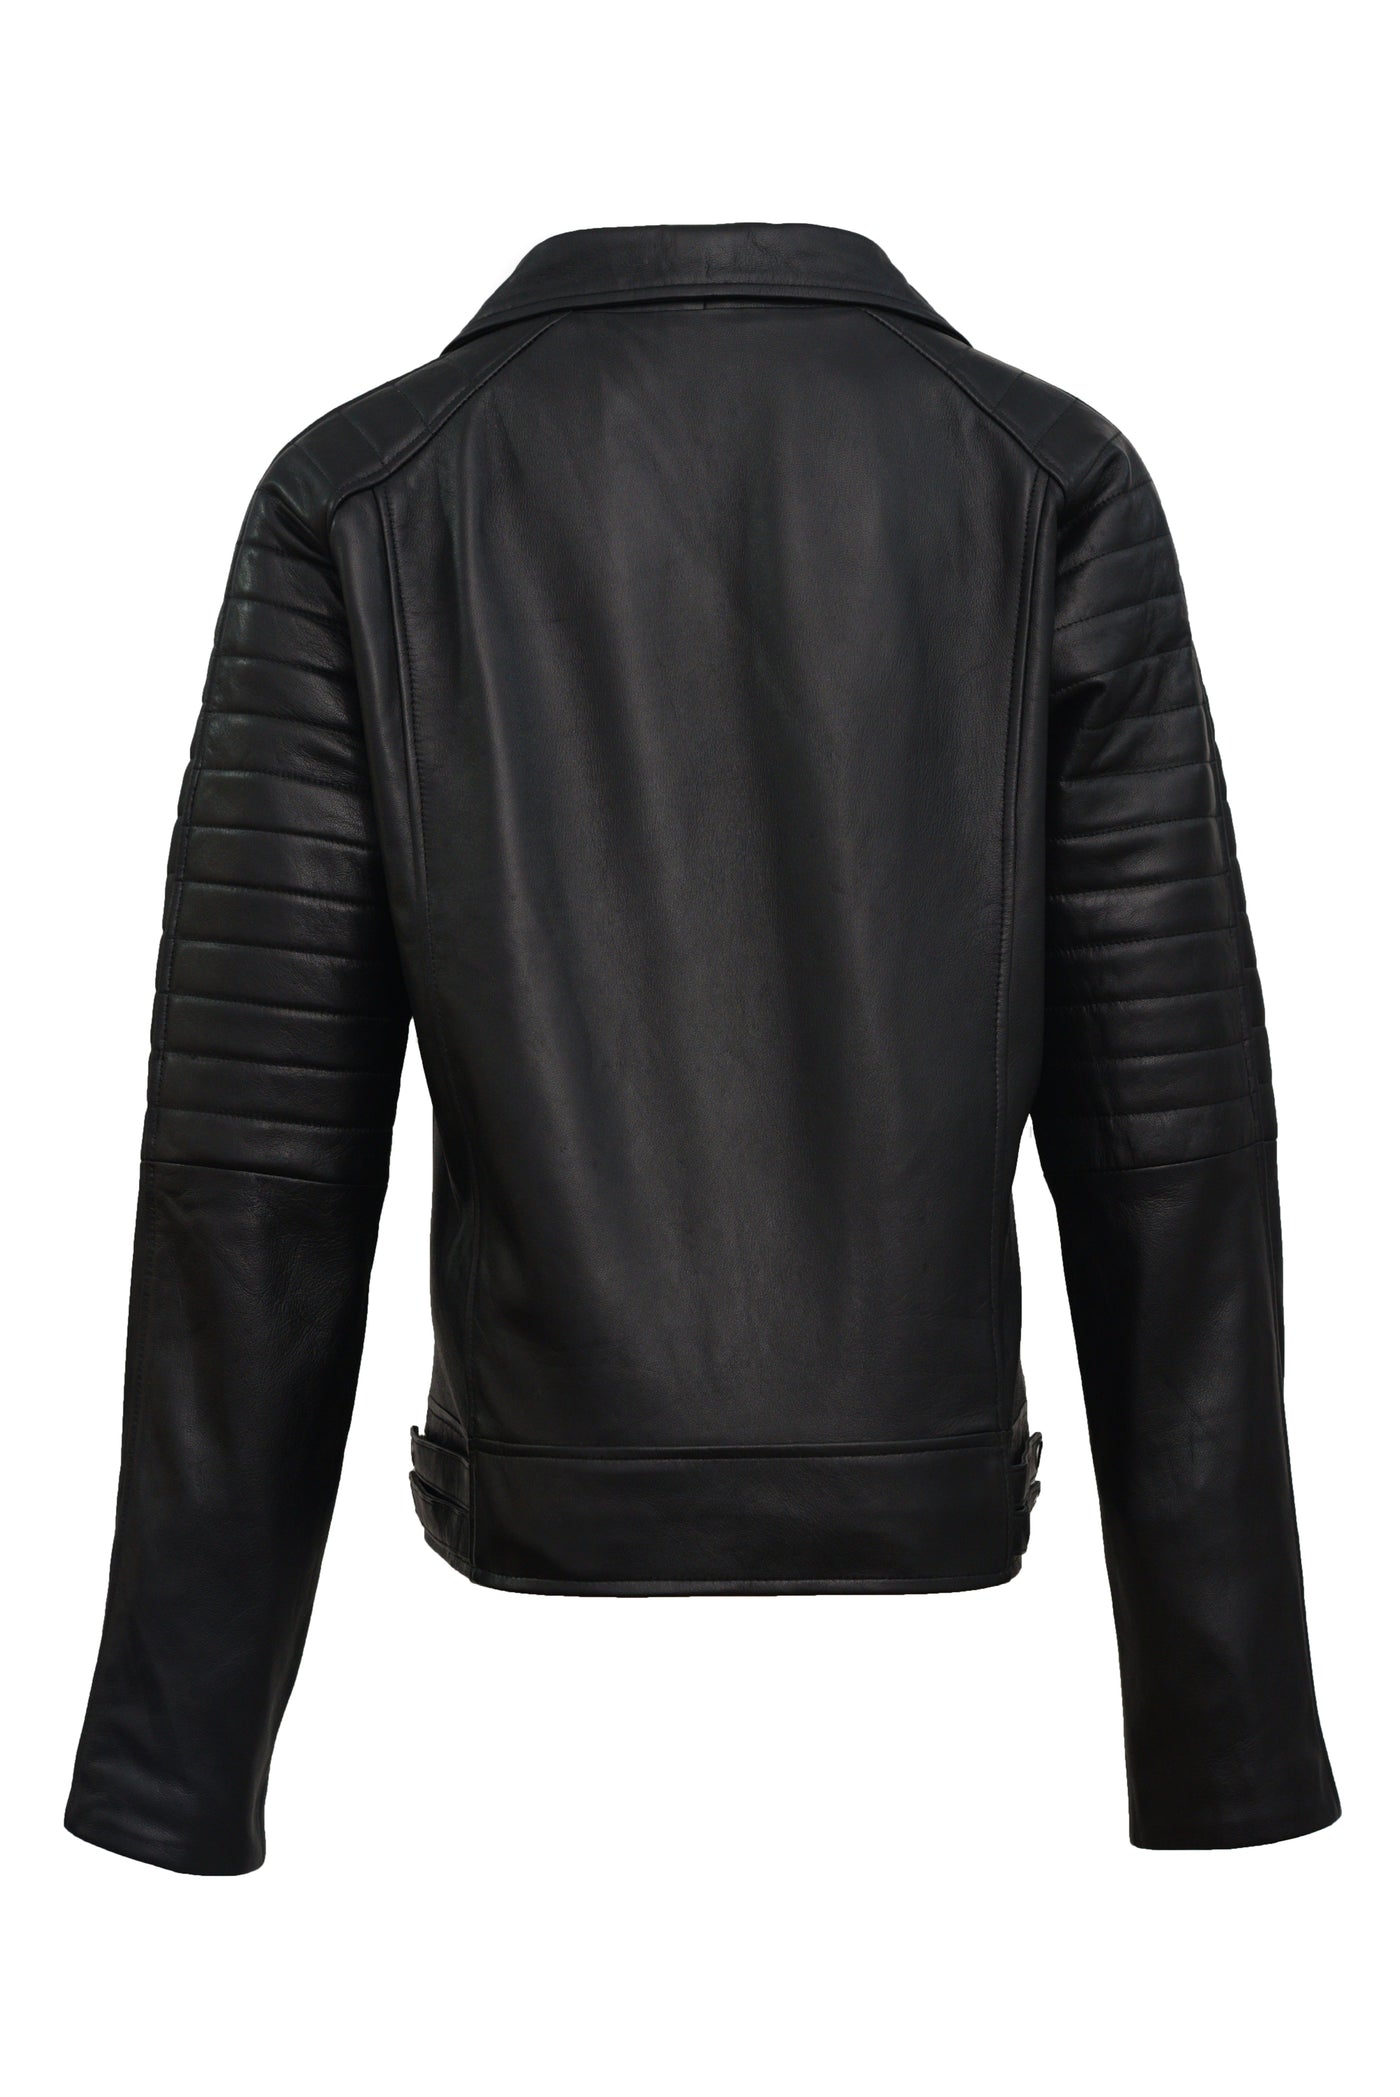 Shop Leather Biker Jacket For Women